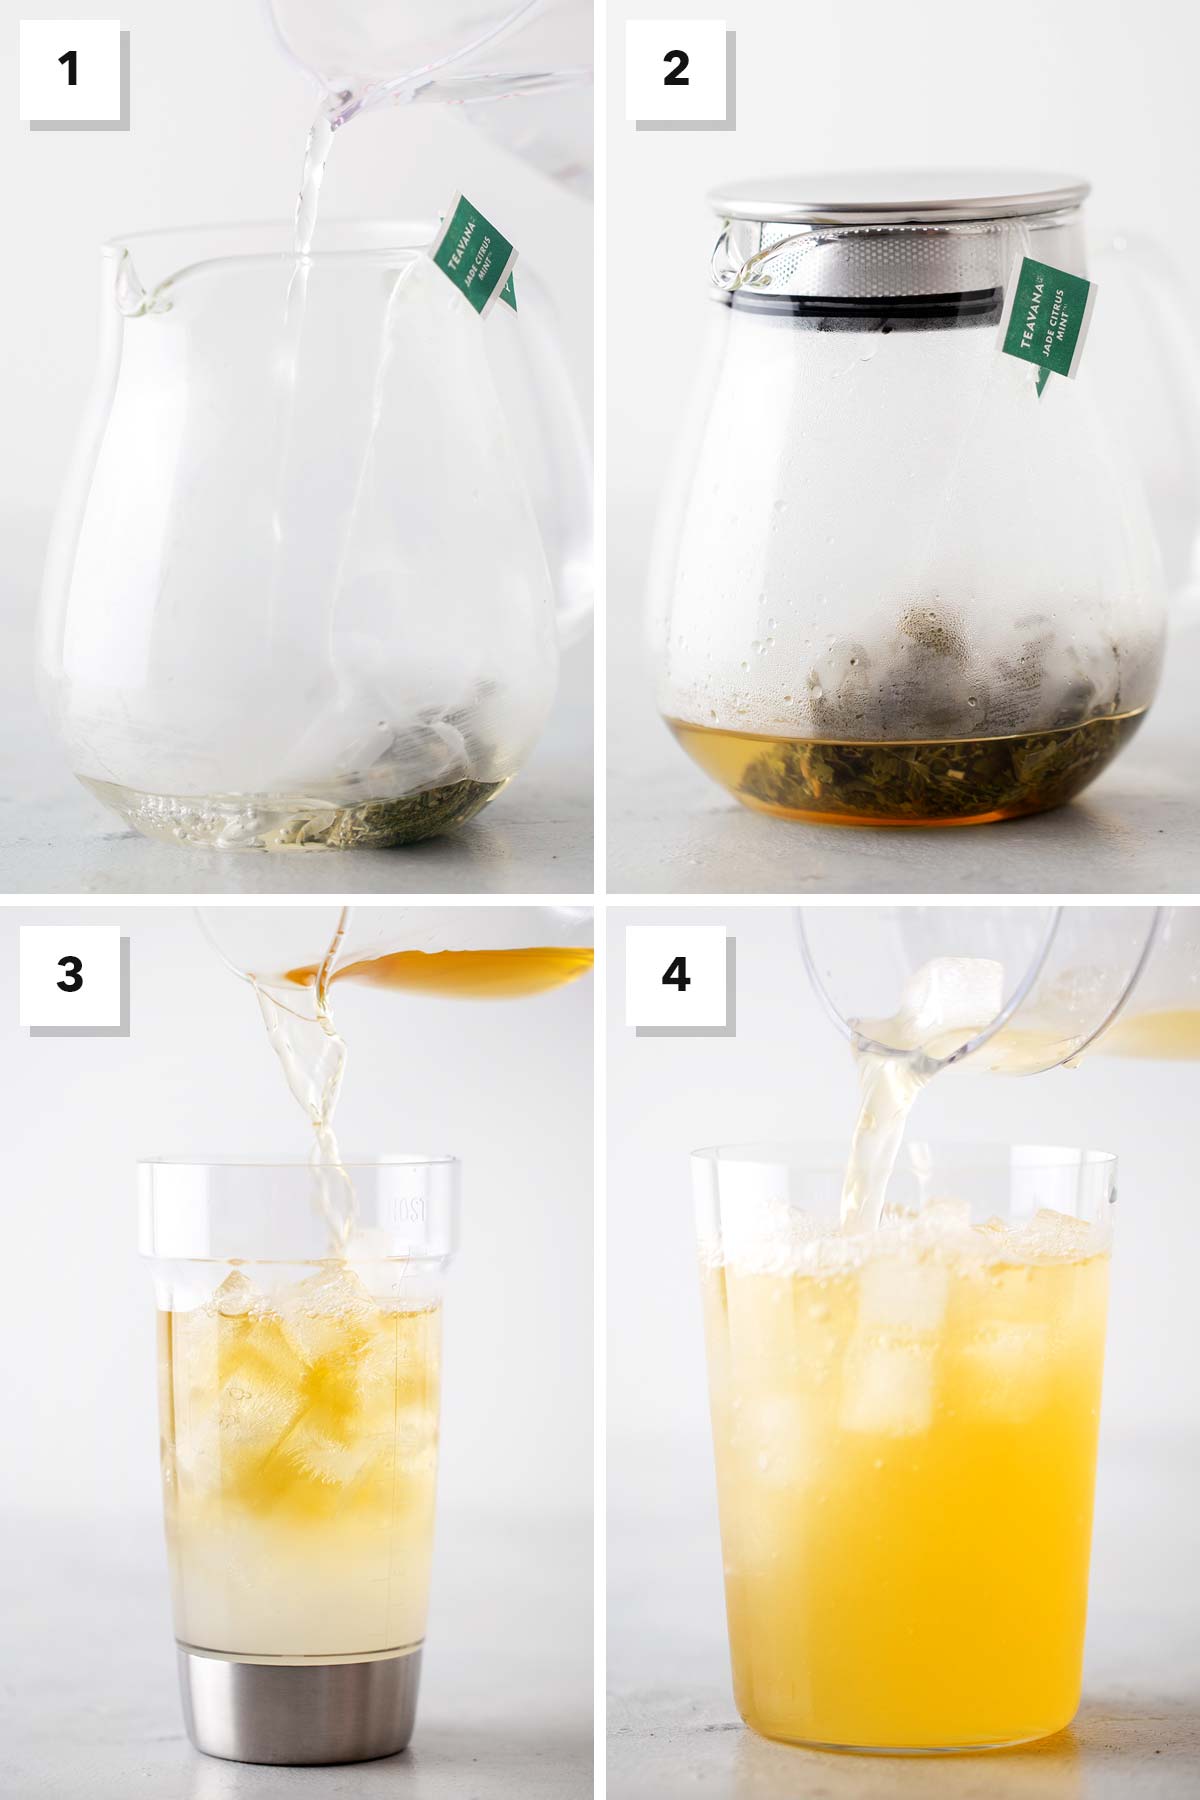 Iced green tea lemonade recipe steps.